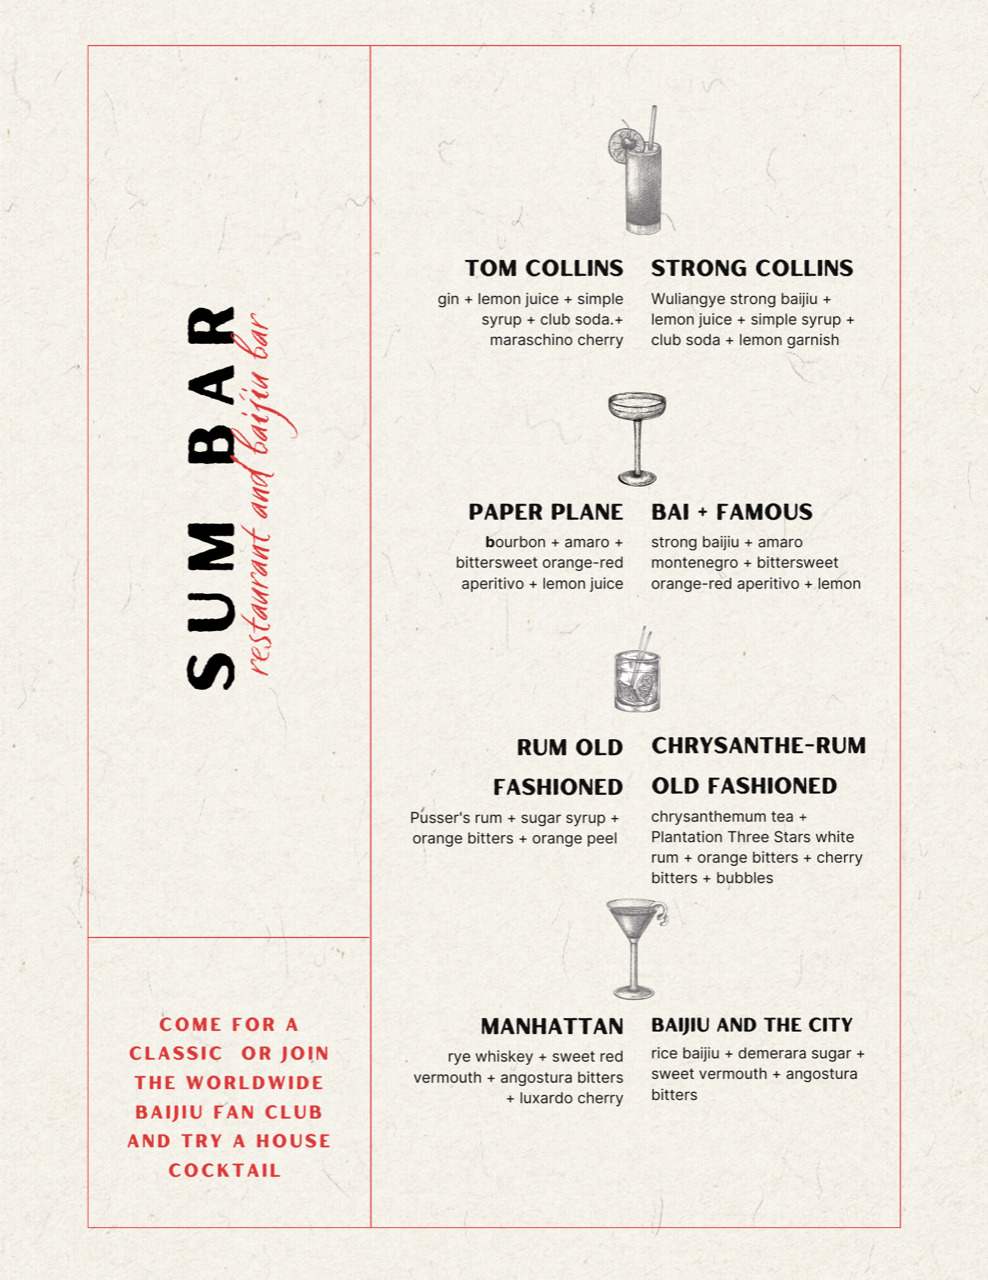 Dim sum restaurant Sum Bar's cocktail menu